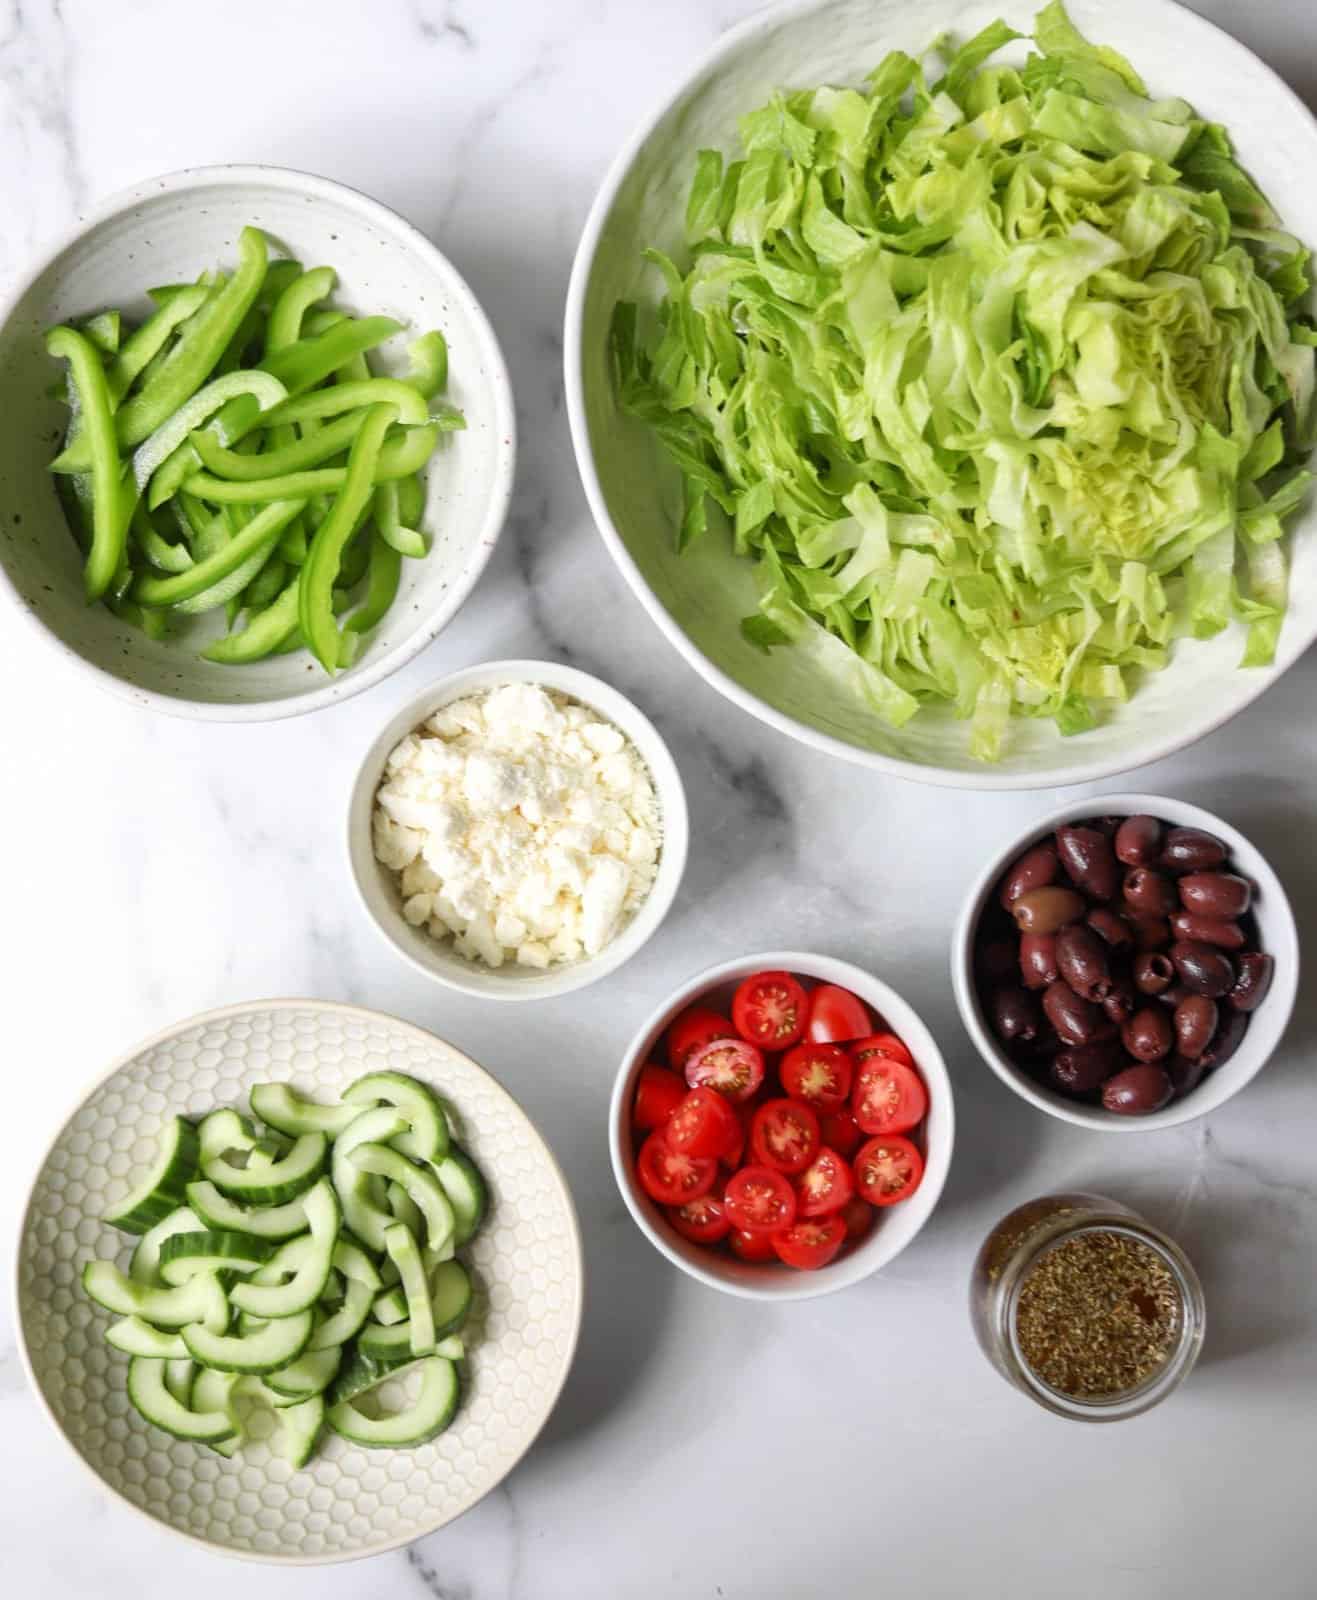 Greek salad ingredients in white bowls